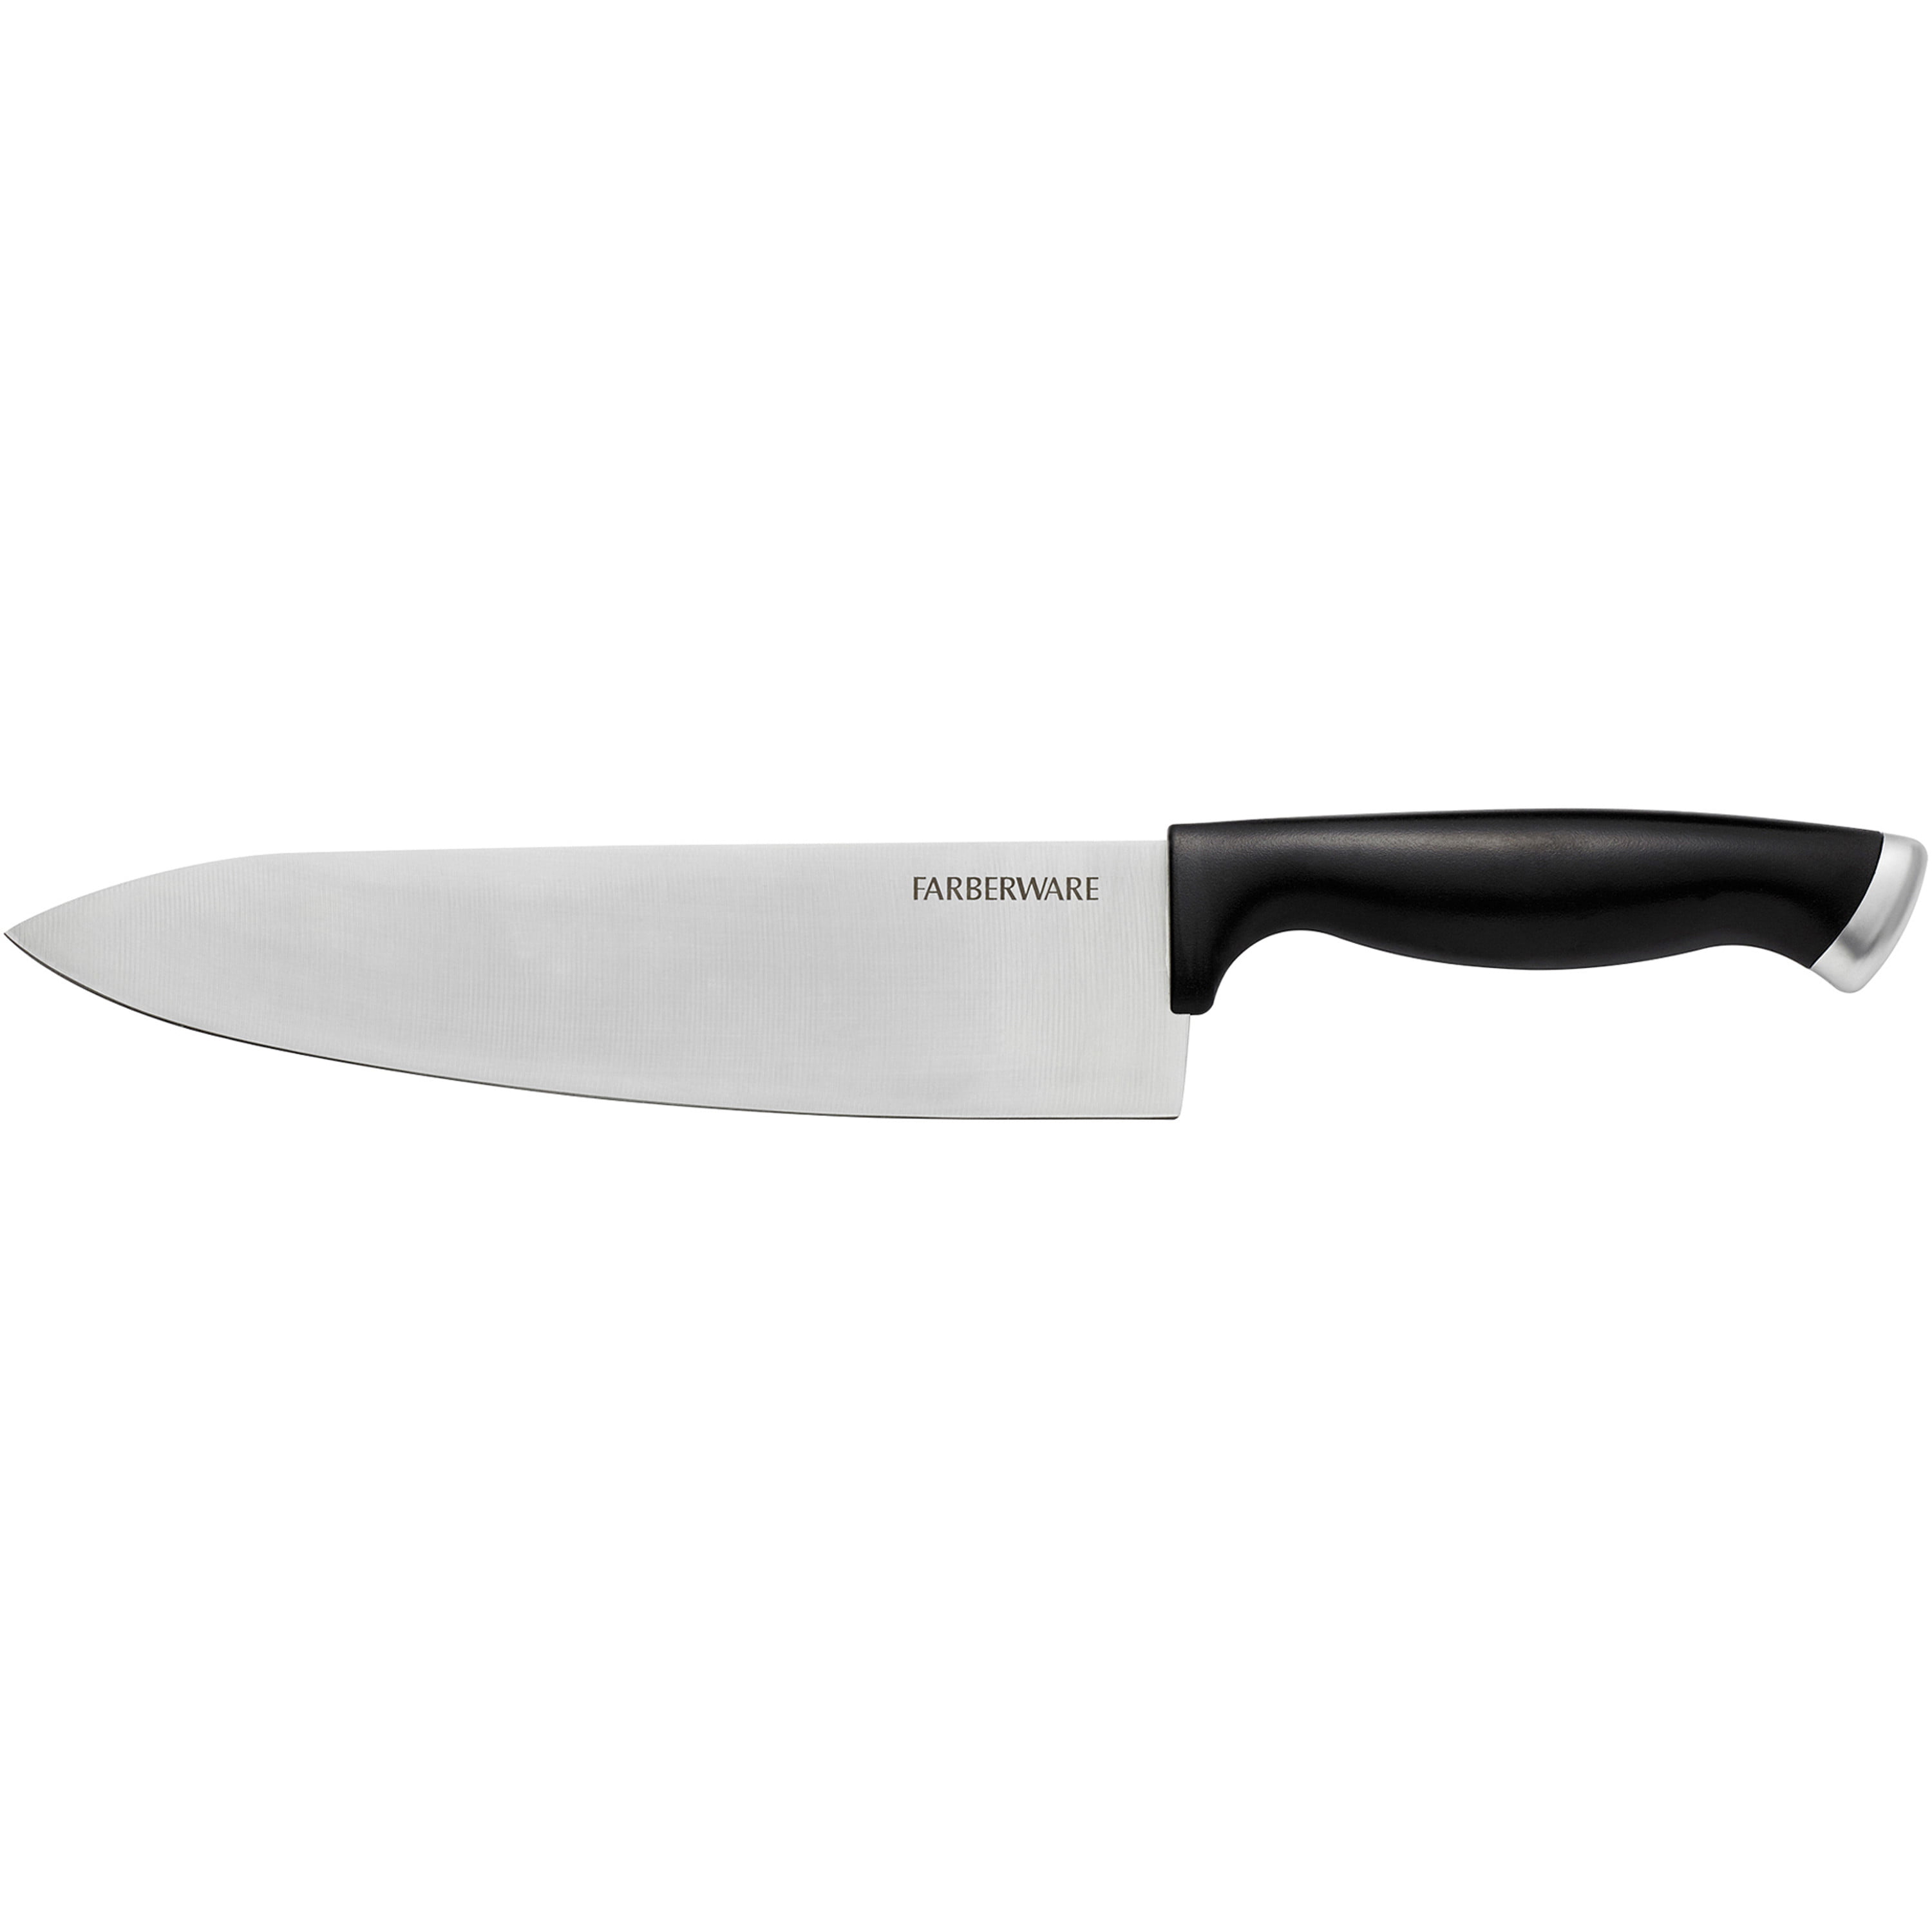 HUGE Custom Chef knife - 9 Best VG10 Damascus Gyuto Made In